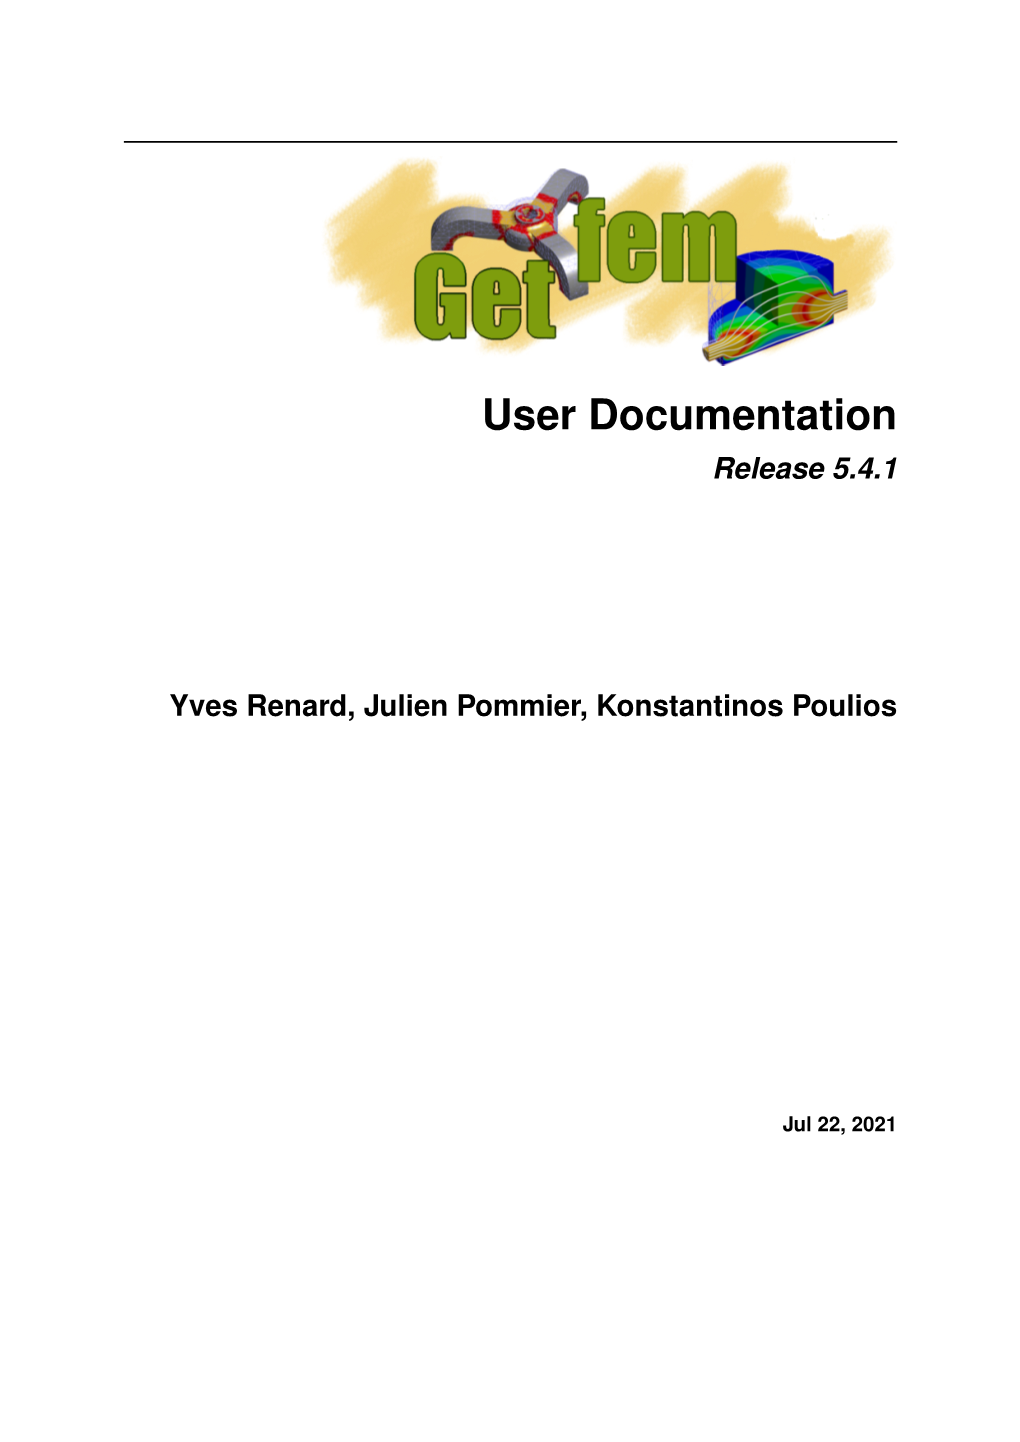 User Documentation Release 5.4.1